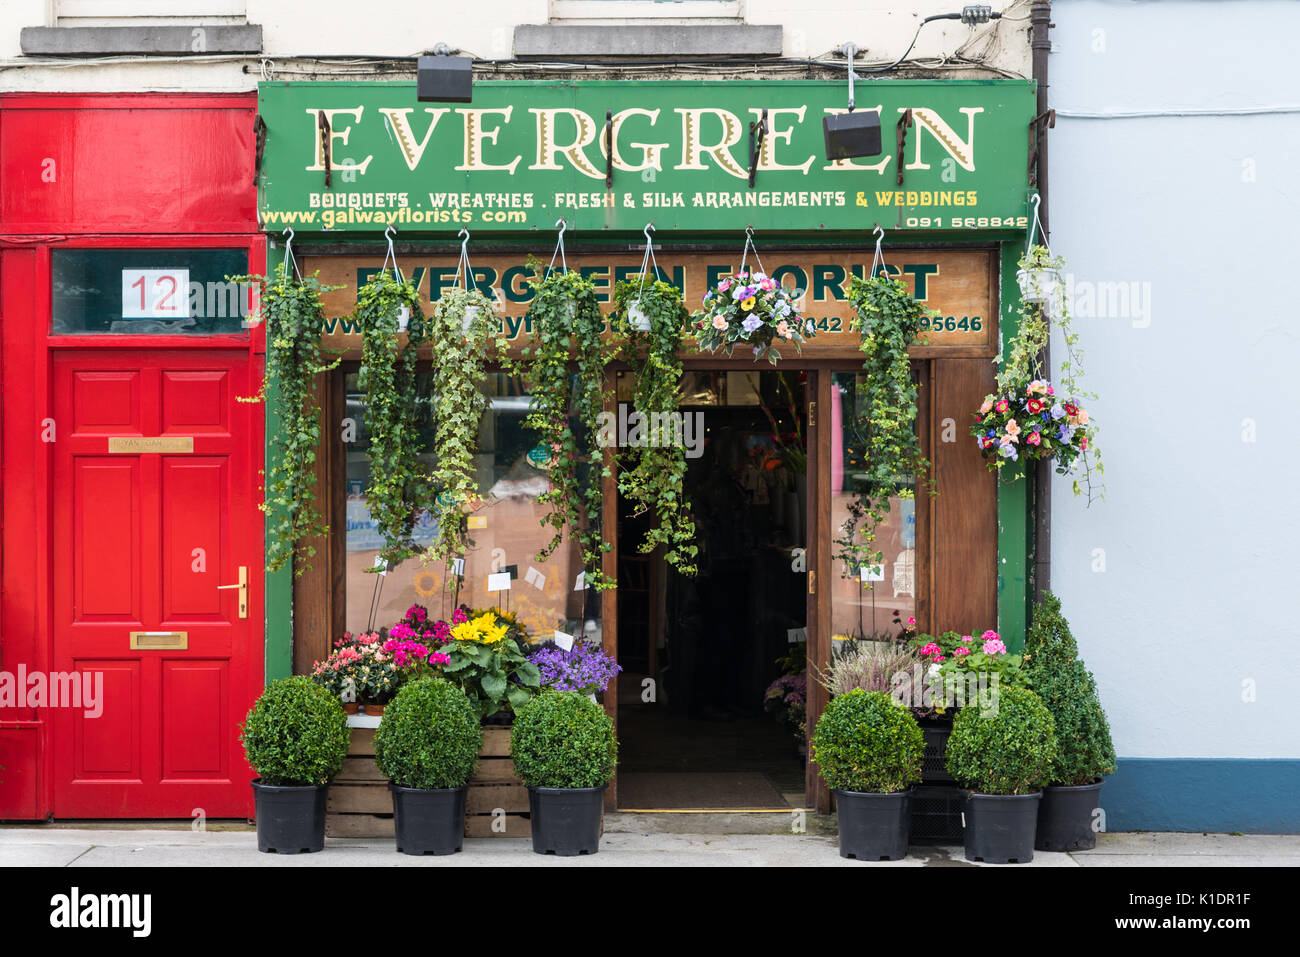 Galway, Ireland - August 3, 2017: Small business Flower shop 